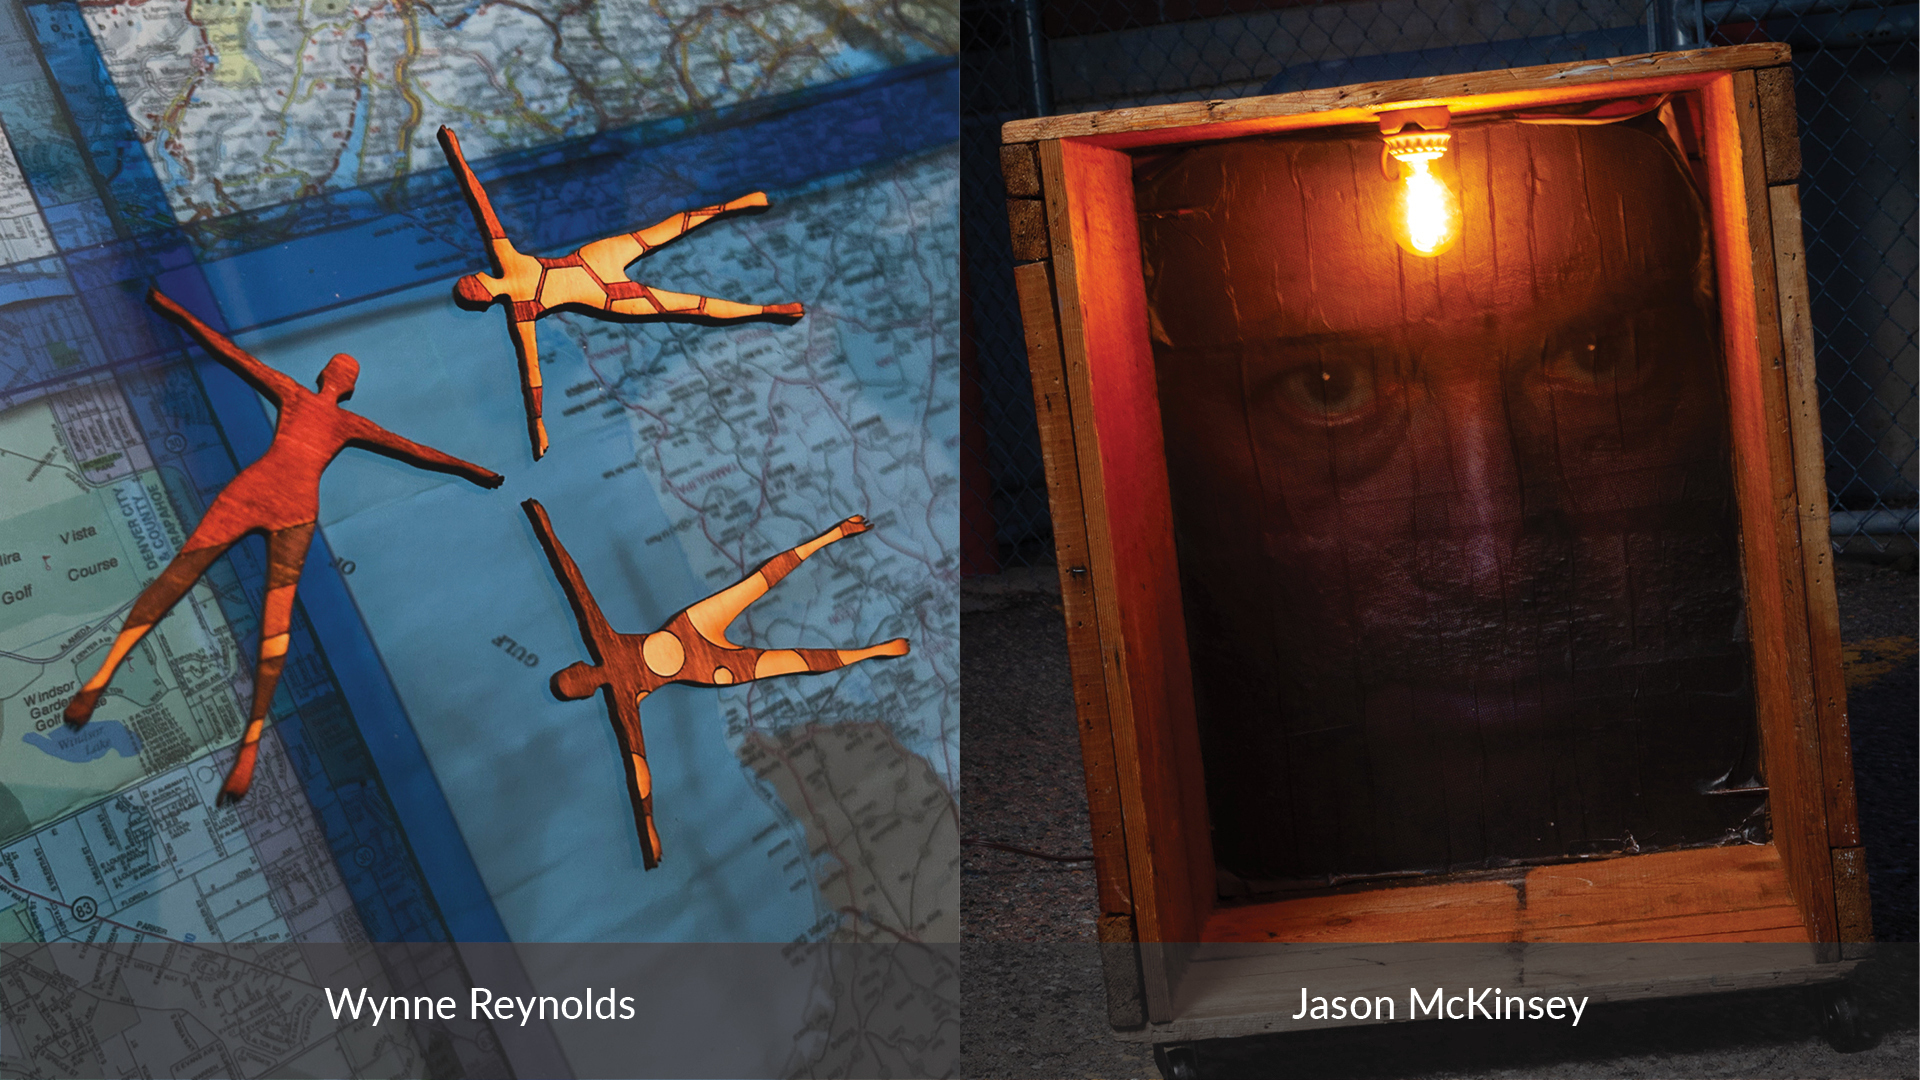 Works by Wynne Reynolds and Jason McKinsey, Lakewood, Colorado, United States